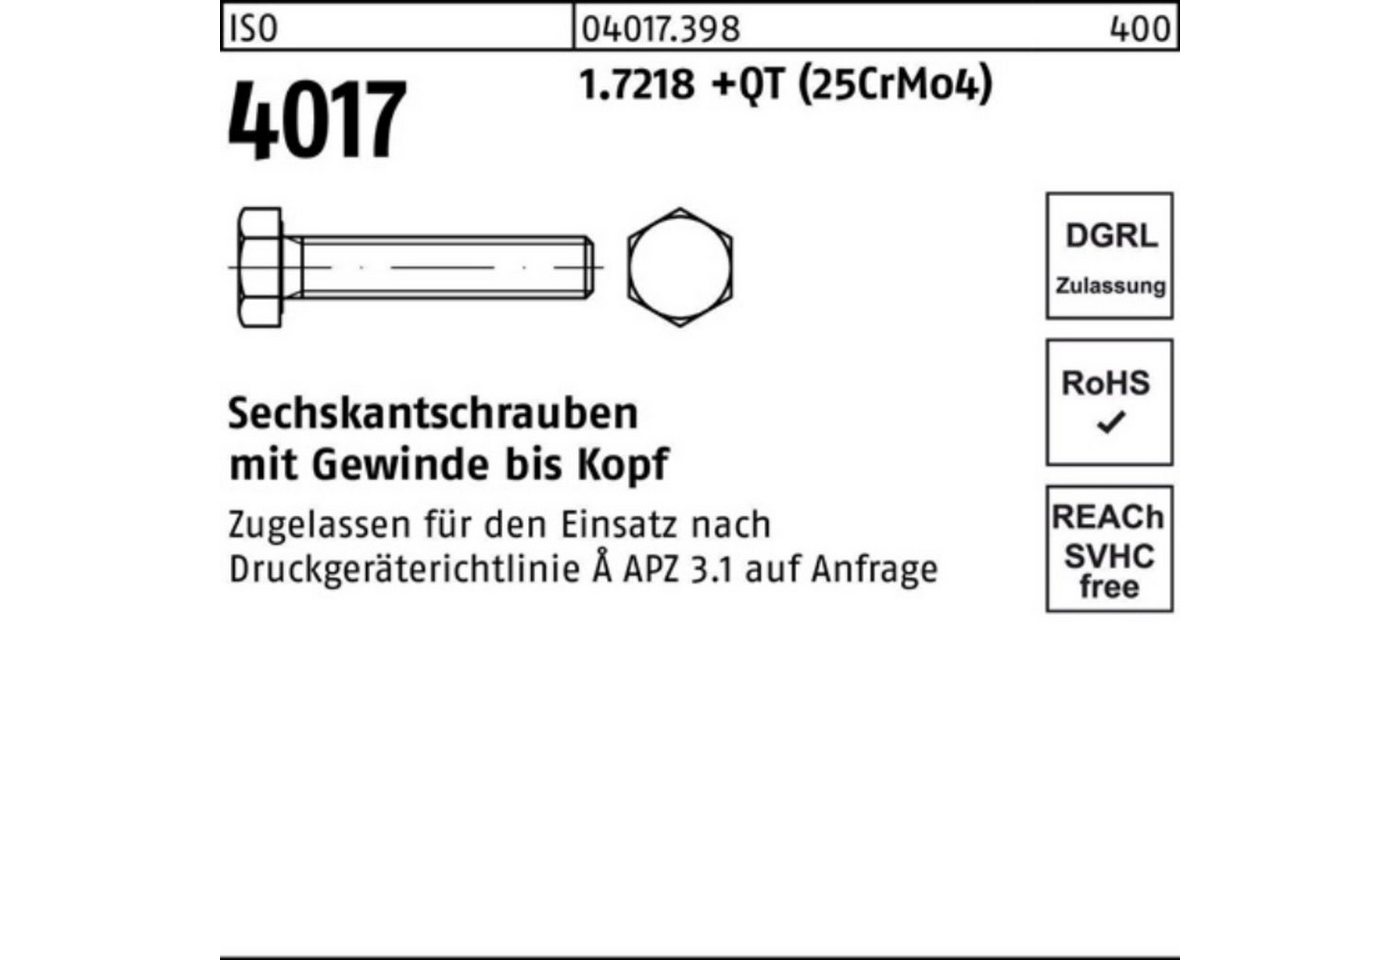 Bufab Sechskantschraube 100er Pack Sechskantschraube ISO 4017 VG M16x 40 1.7218 +QT (25CrMo4) von Bufab